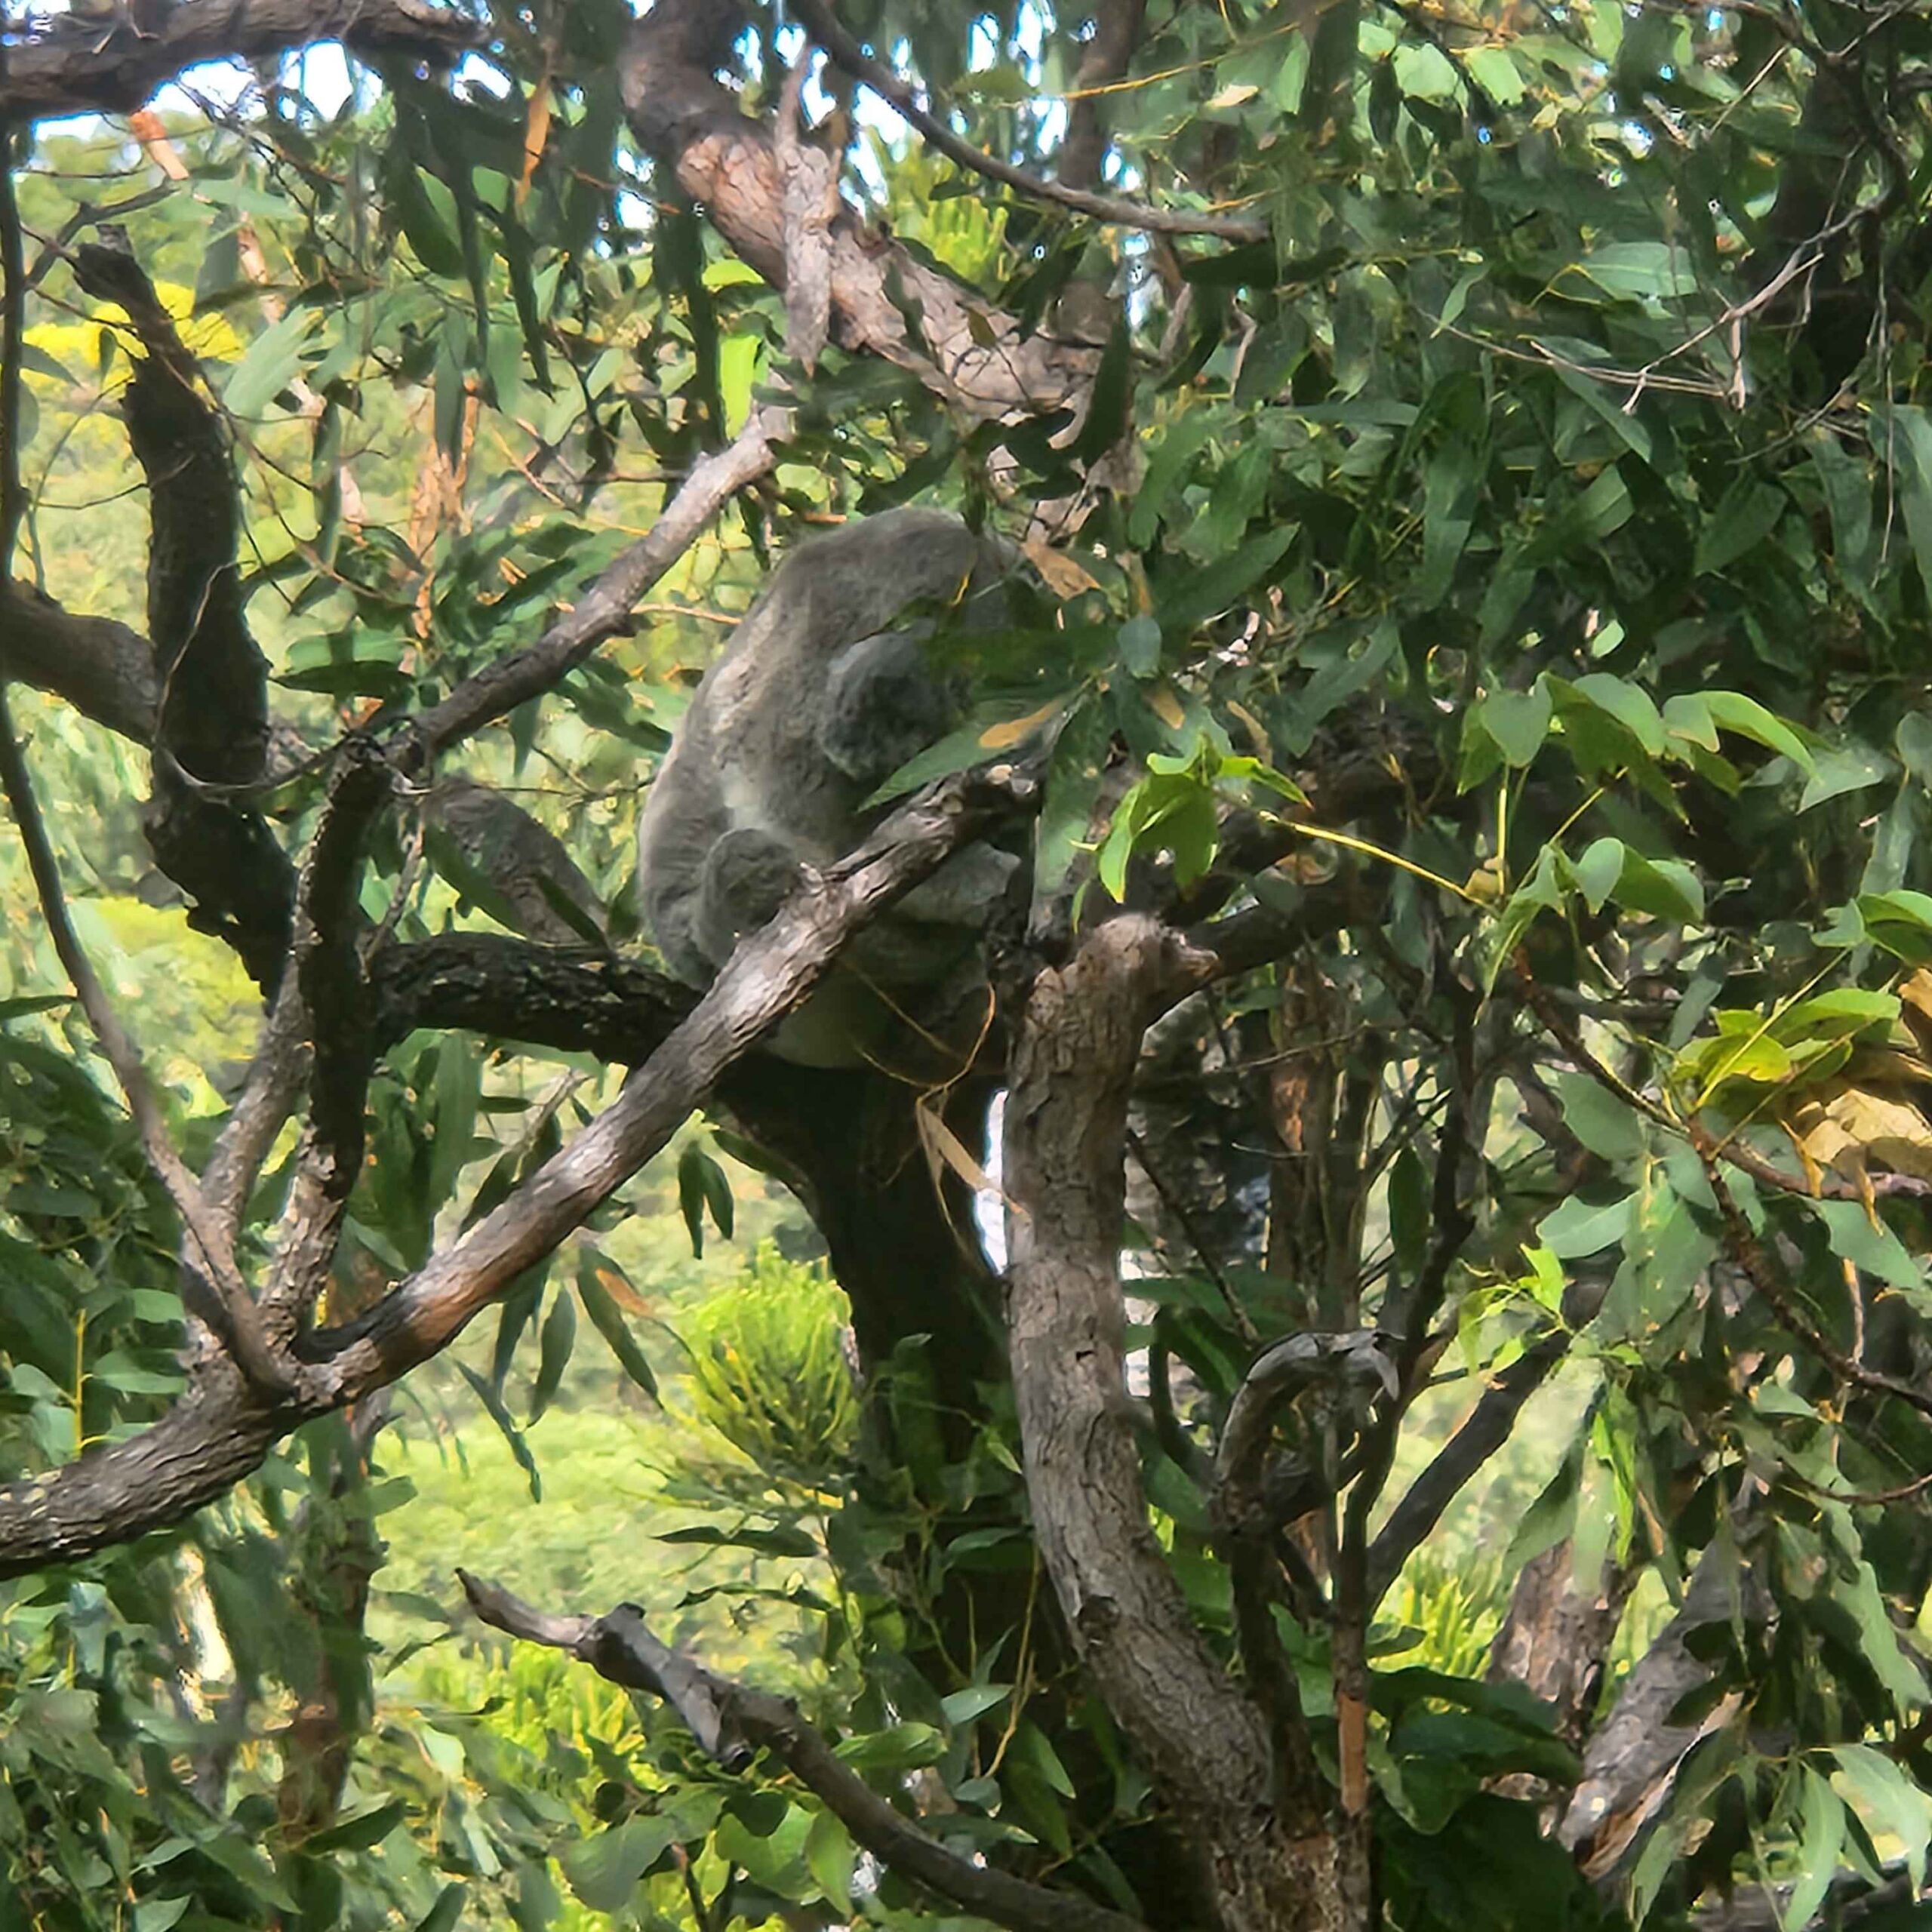 Another Yunbenun koala